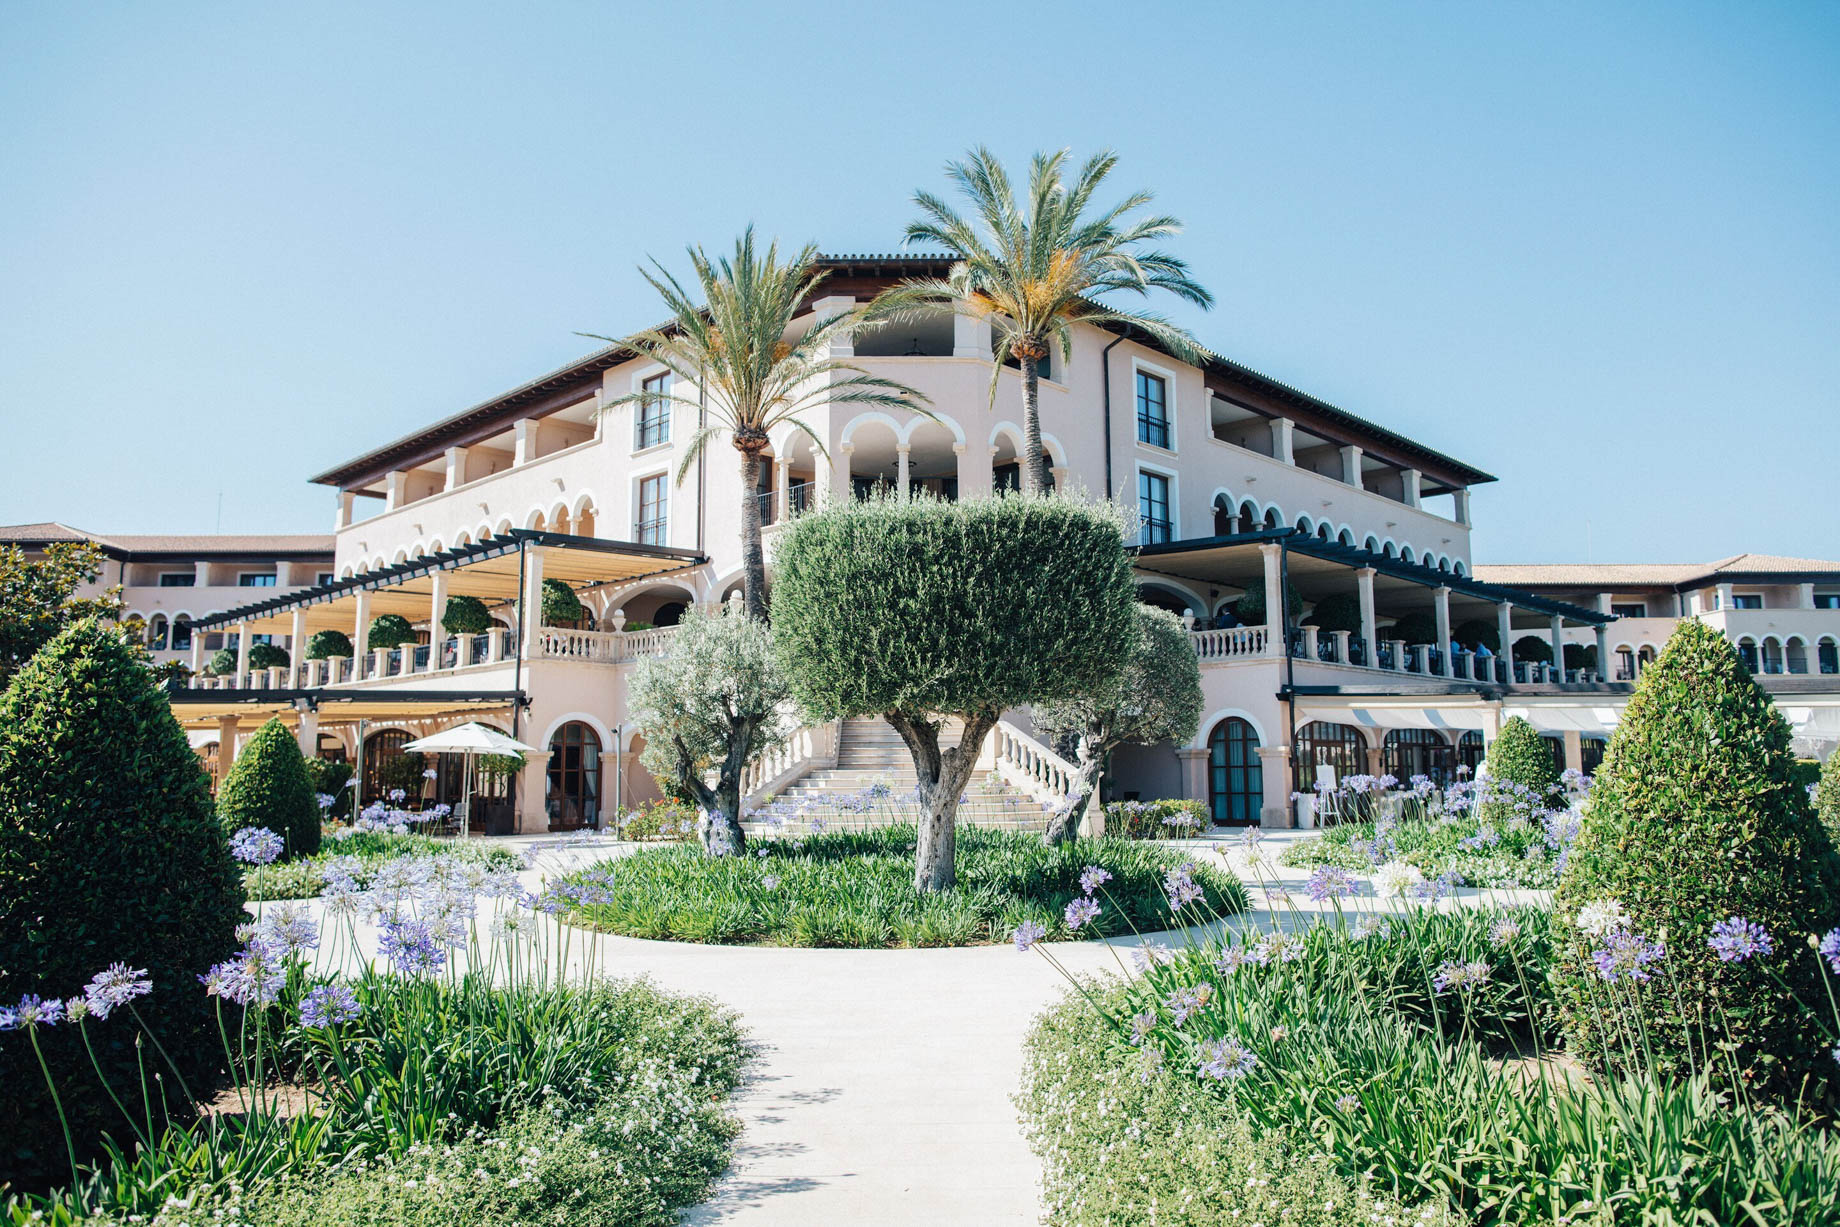 The St. Regis Mardavall Mallorca Resort – Palma de Mallorca, Spain – Hotel Exterior Building